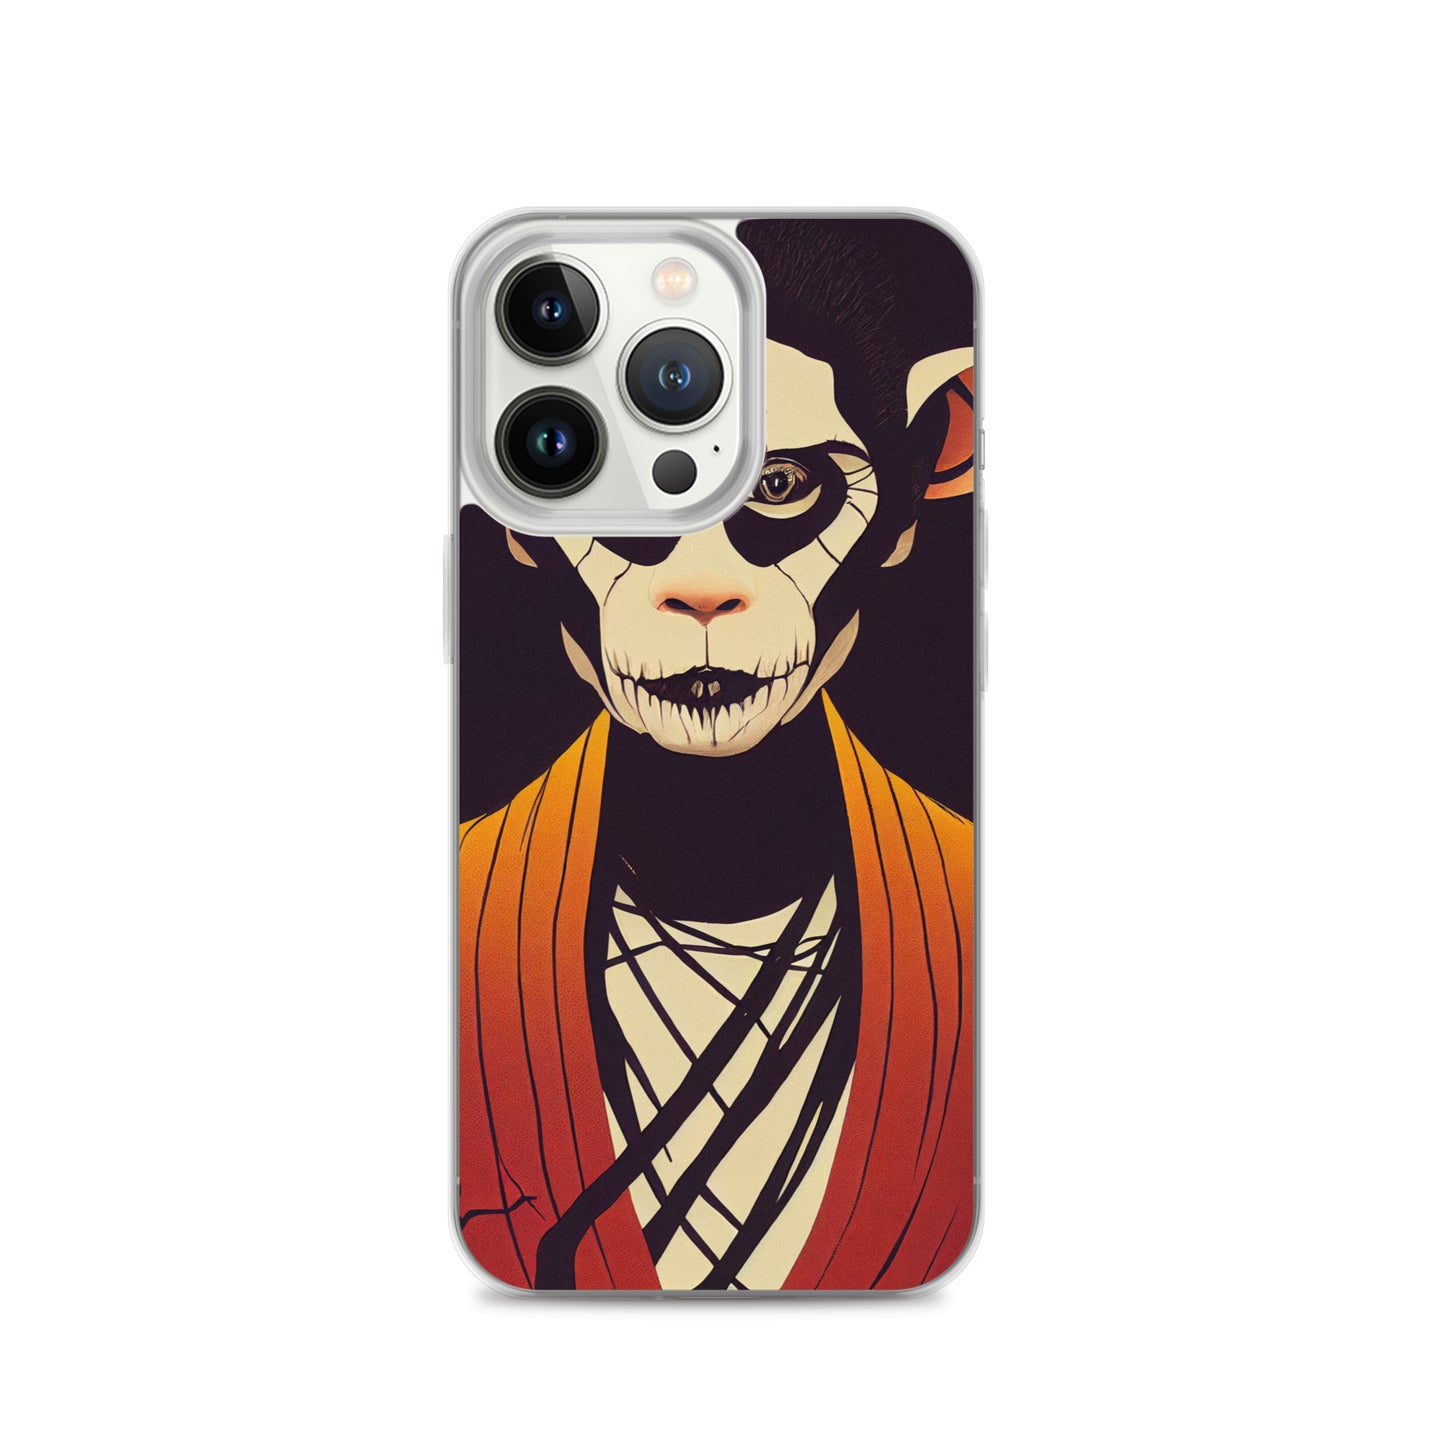 iPhone Case - Zombie Monkey